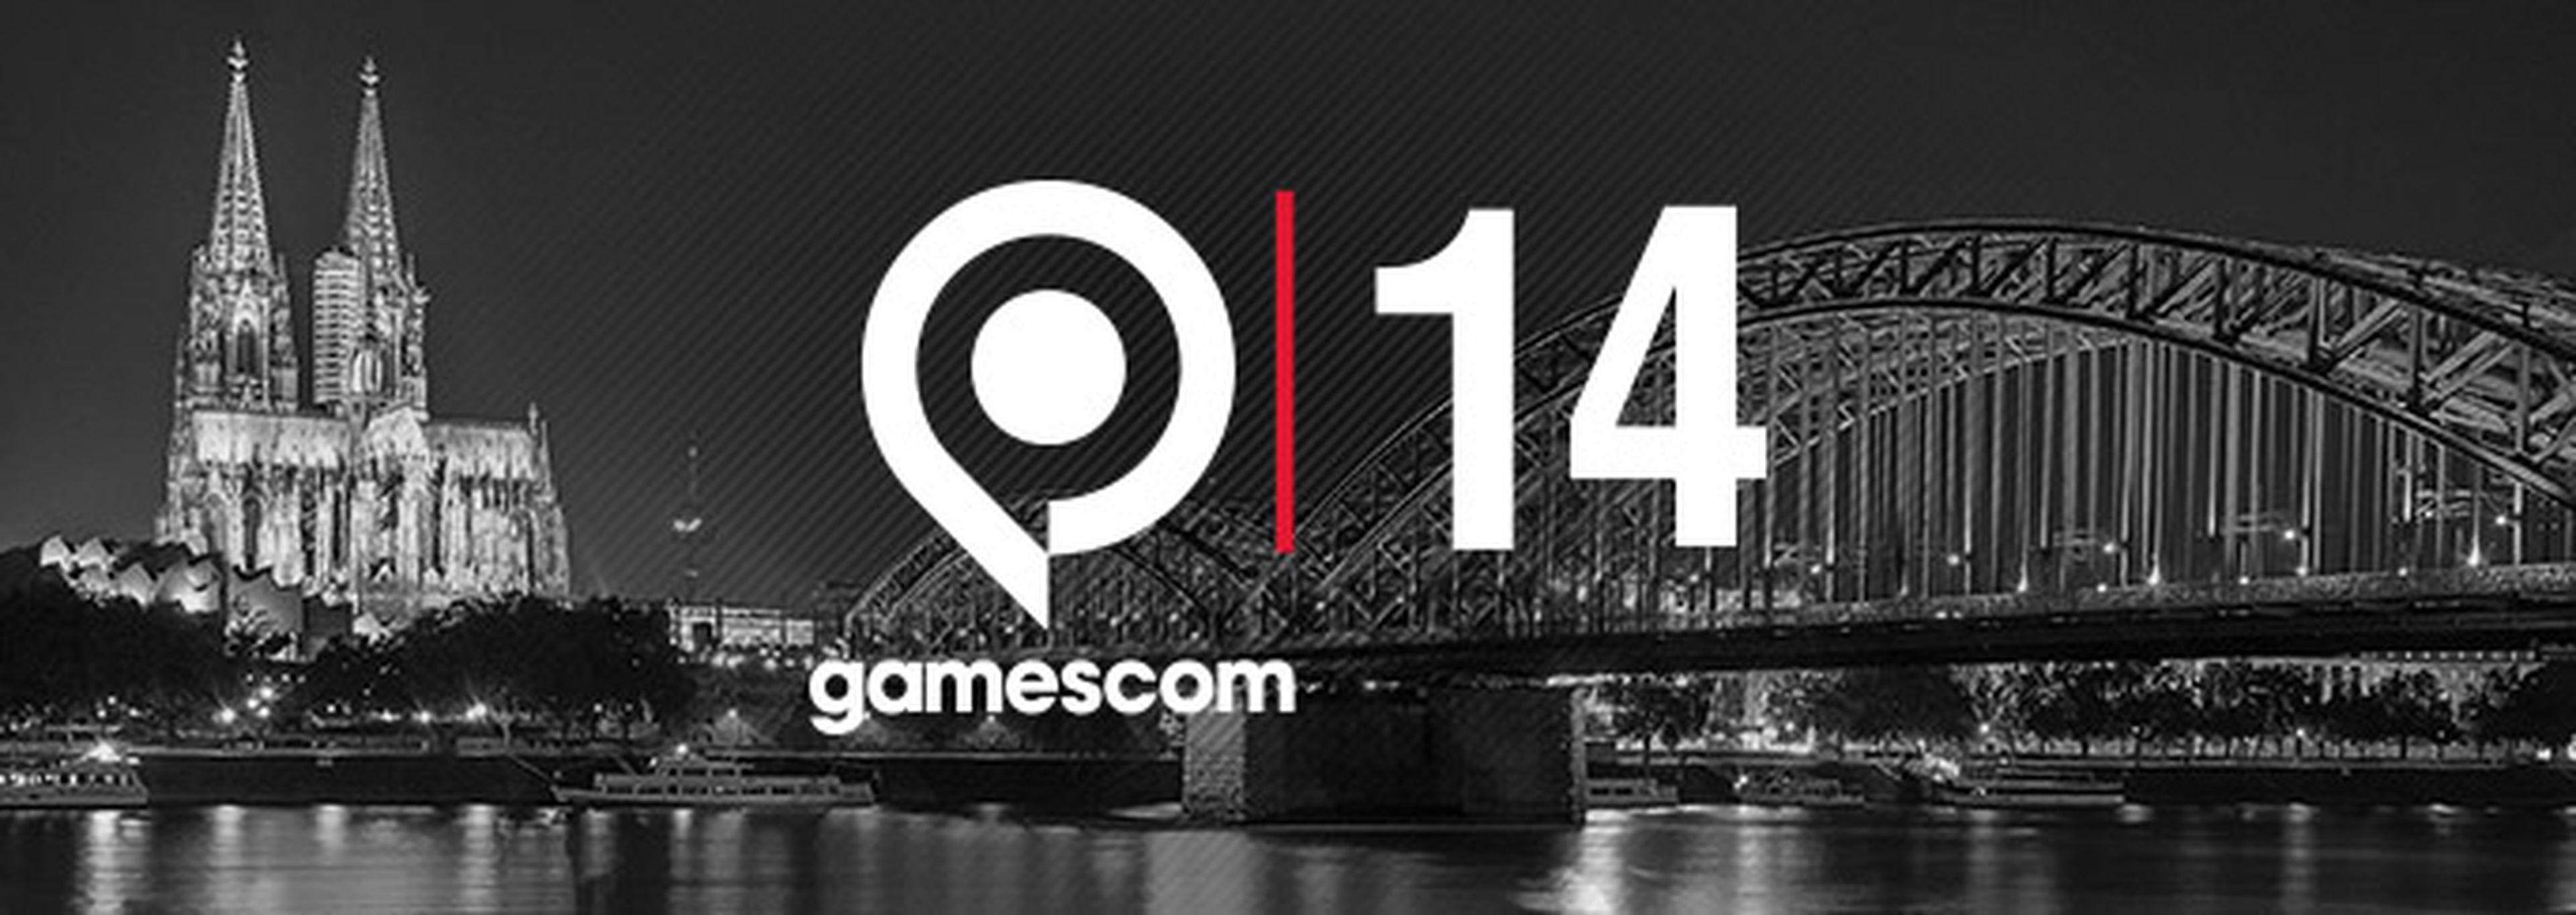 Gamescom 2014: Los streamings eSports de Twitch